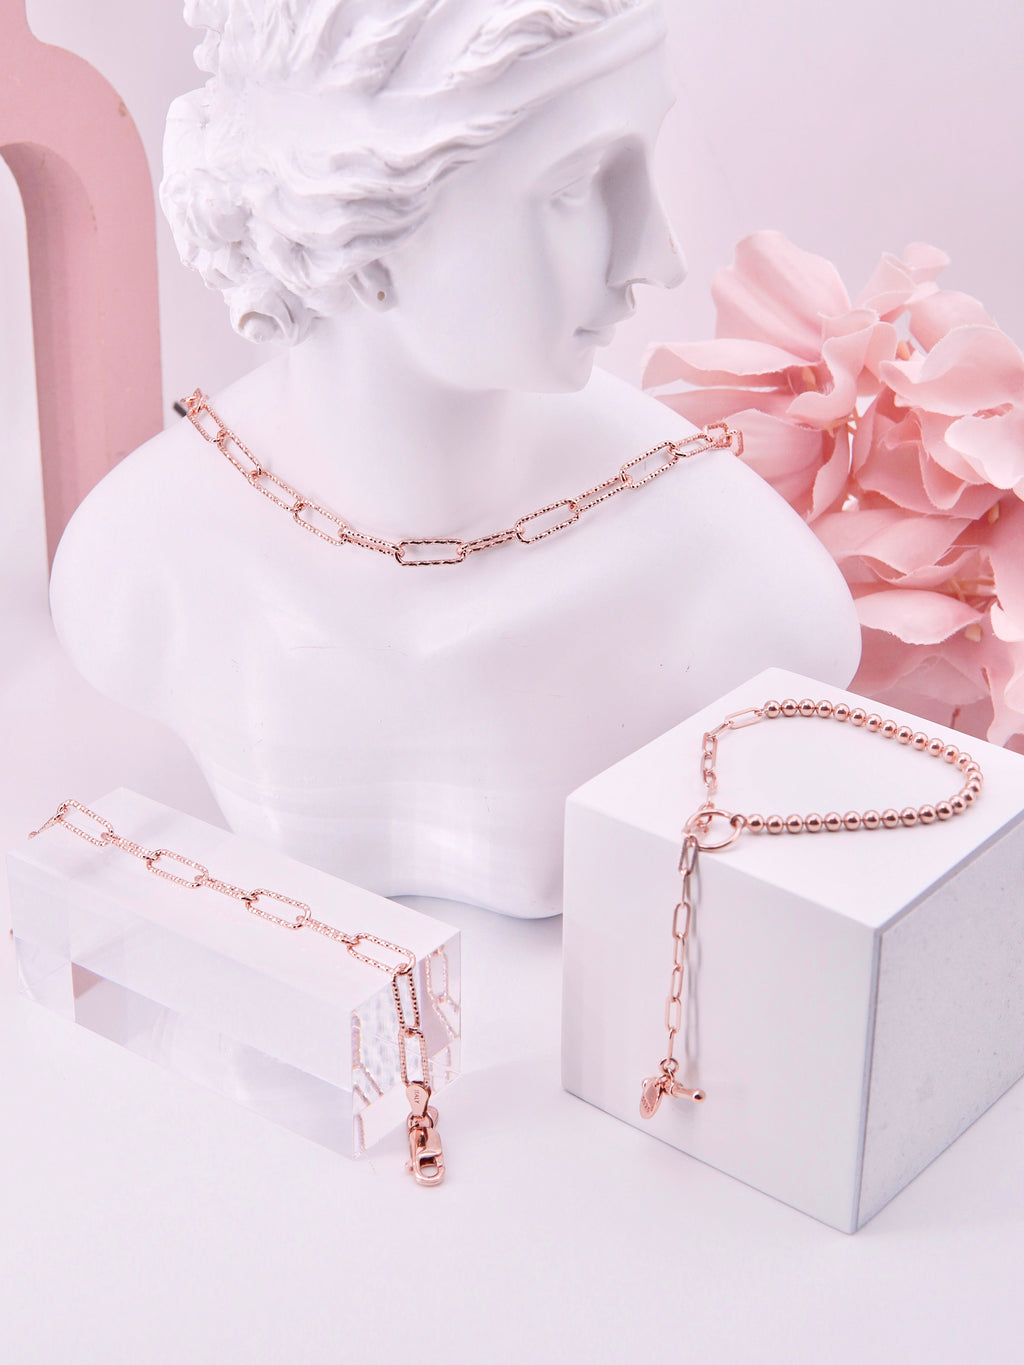 LAFIT · Memory Chain - Bracelet  意大利簡約時尚玫瑰金手鍊